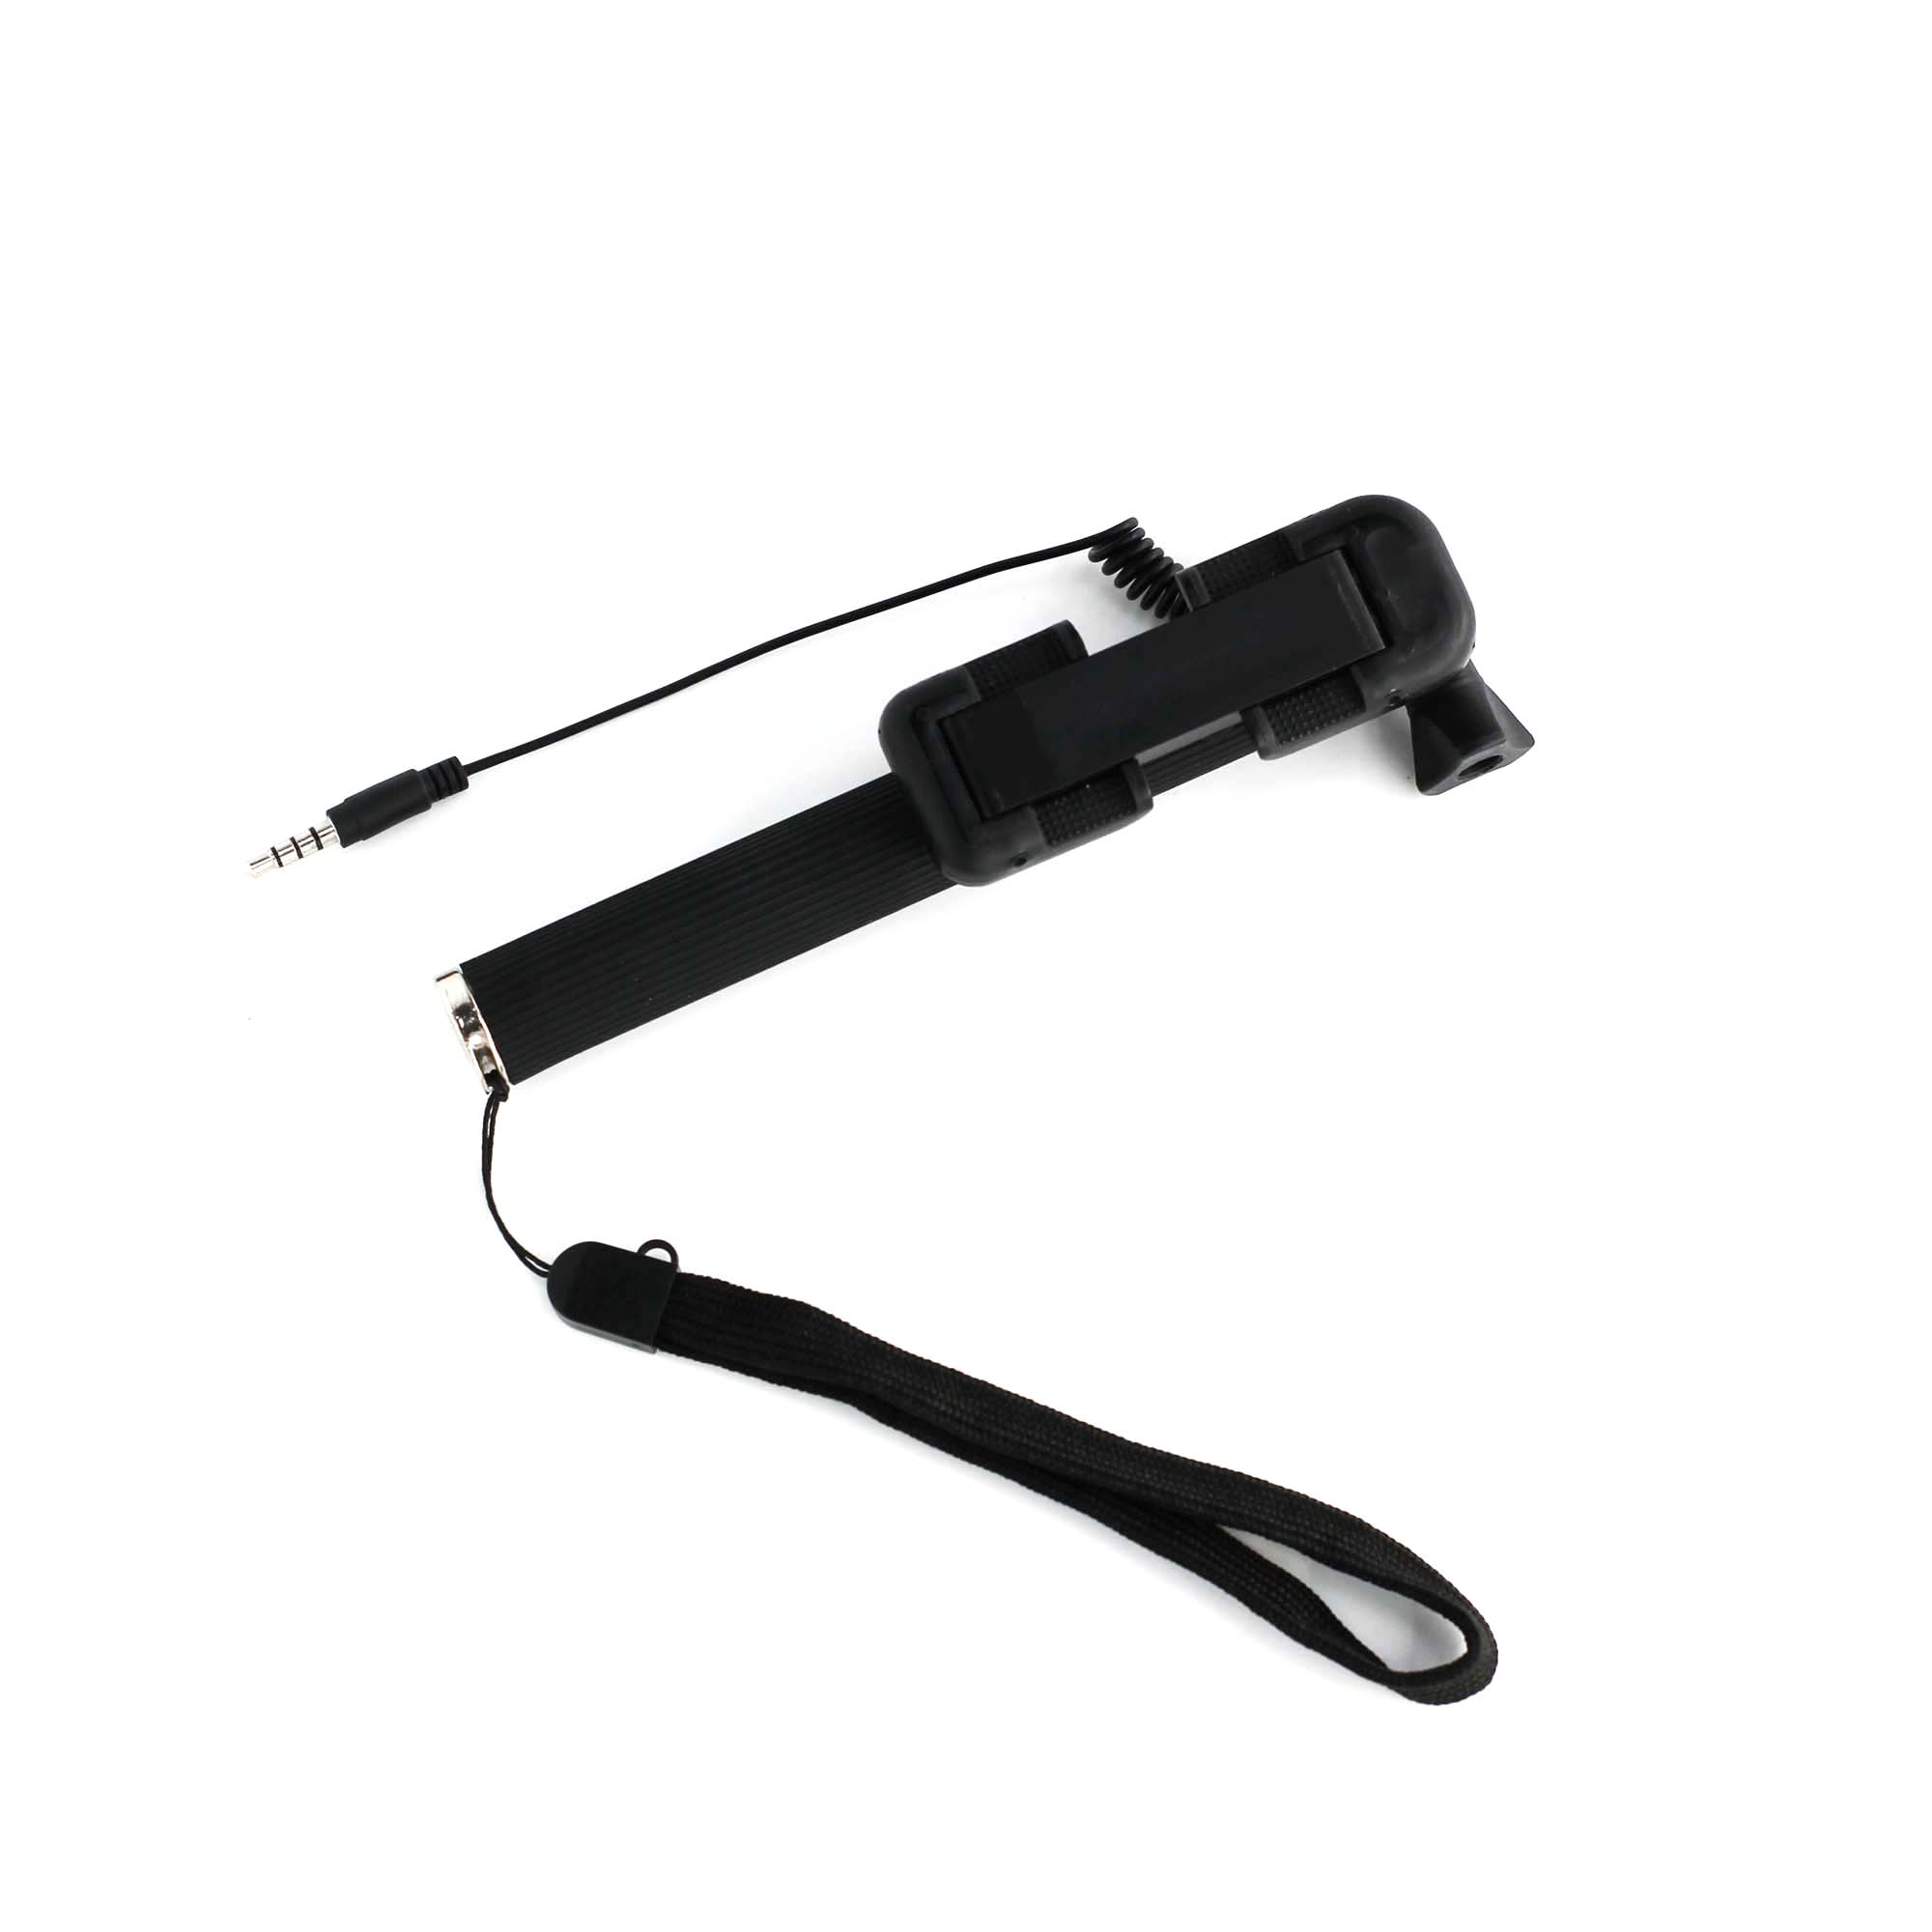 INLAND PRODUCTS ProHT 02525 Super Mini Wired Selfie Stick - Black